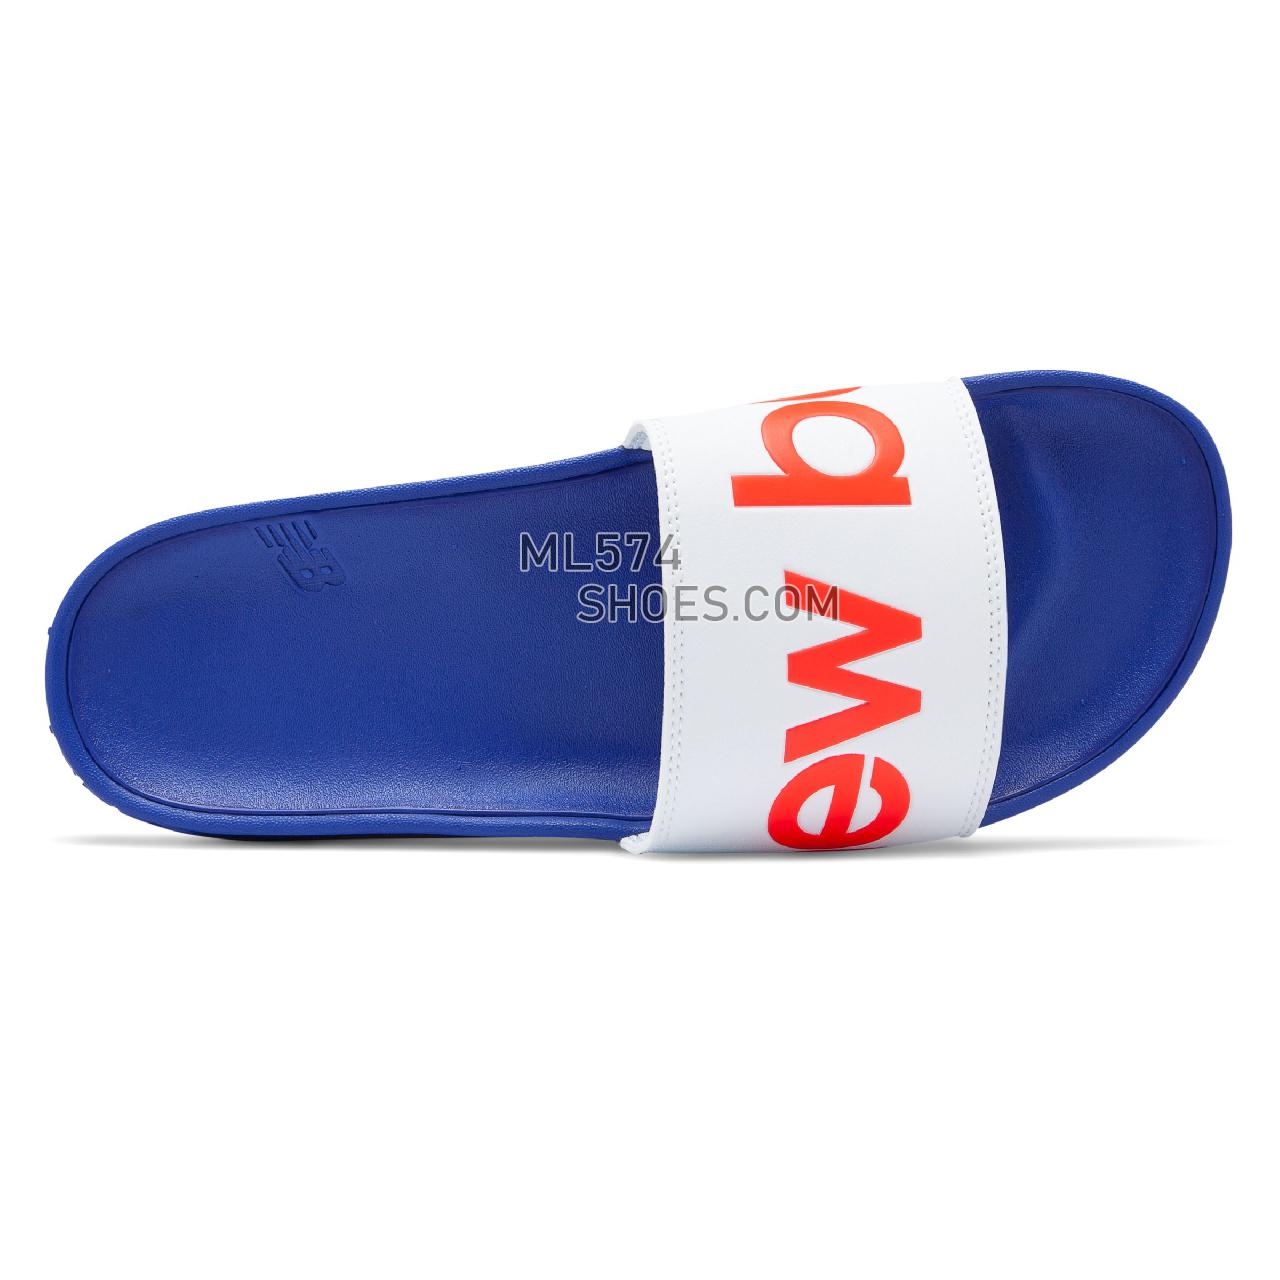 New Balance 200 - Unisex Men's Women's Sandals - Energy Red with Uv Blue - SMF200P1